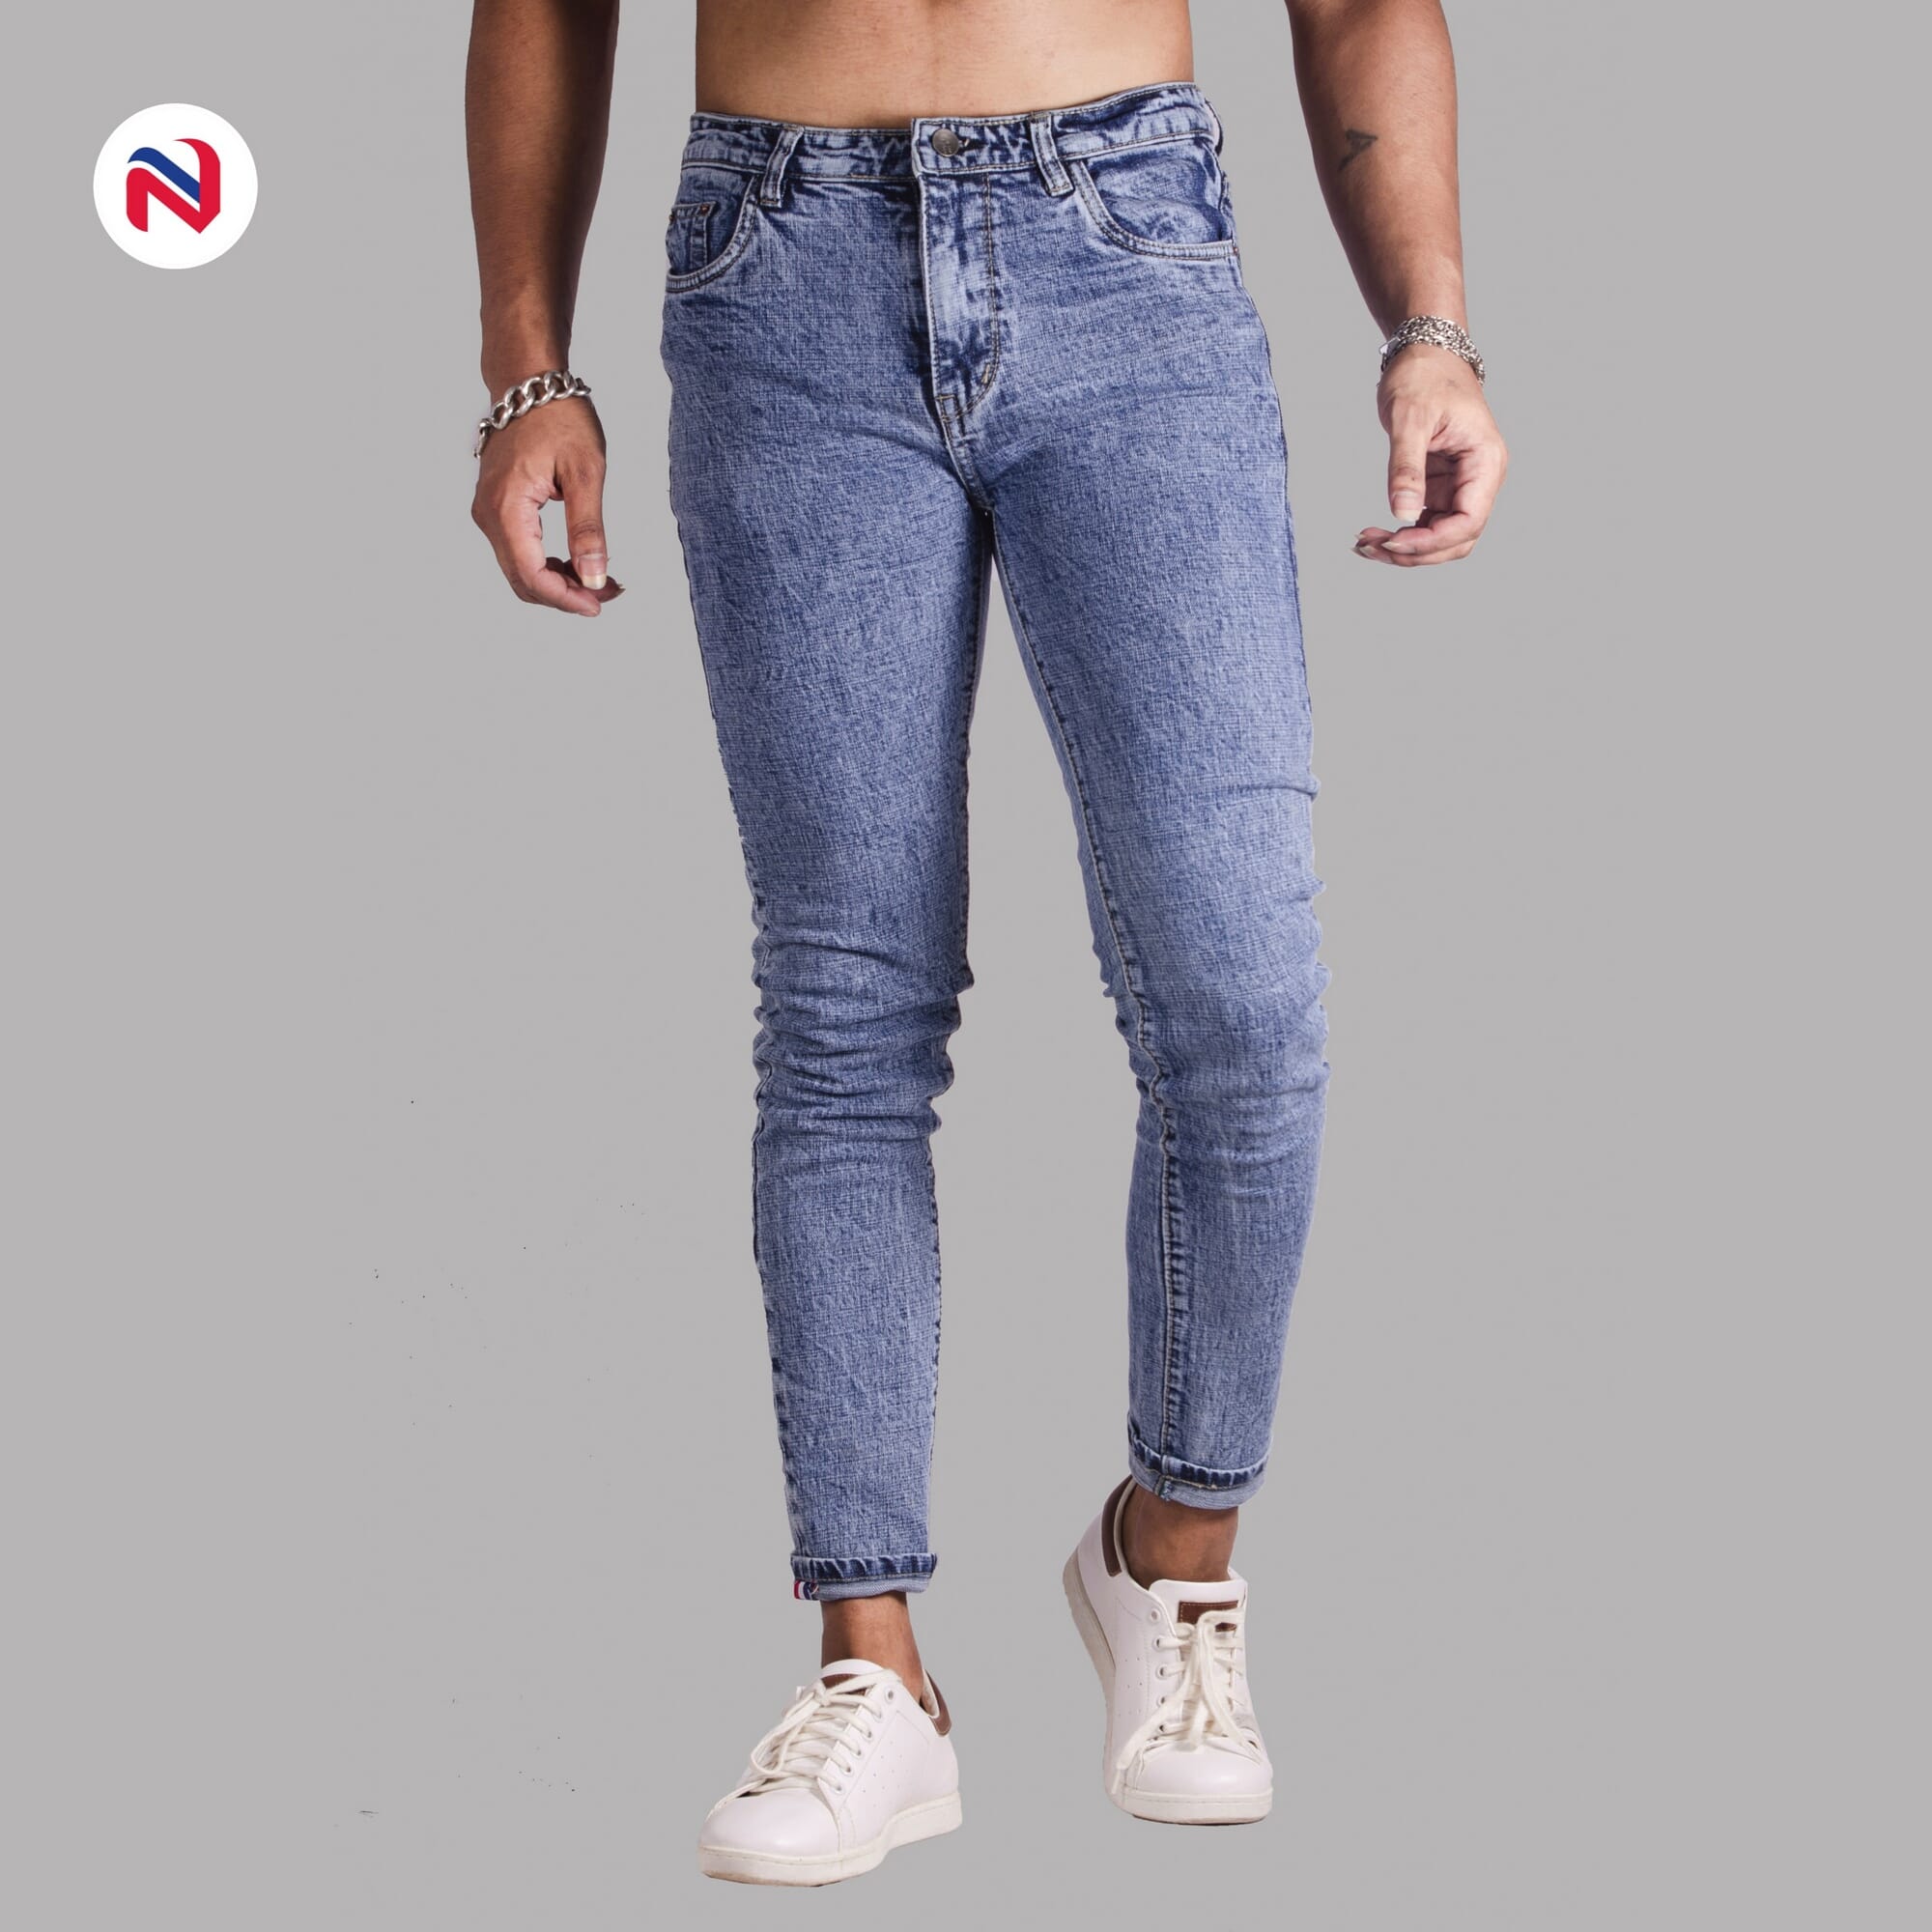 Nyptra Light Blue Distressed Stretchable Premium Jeans For Men